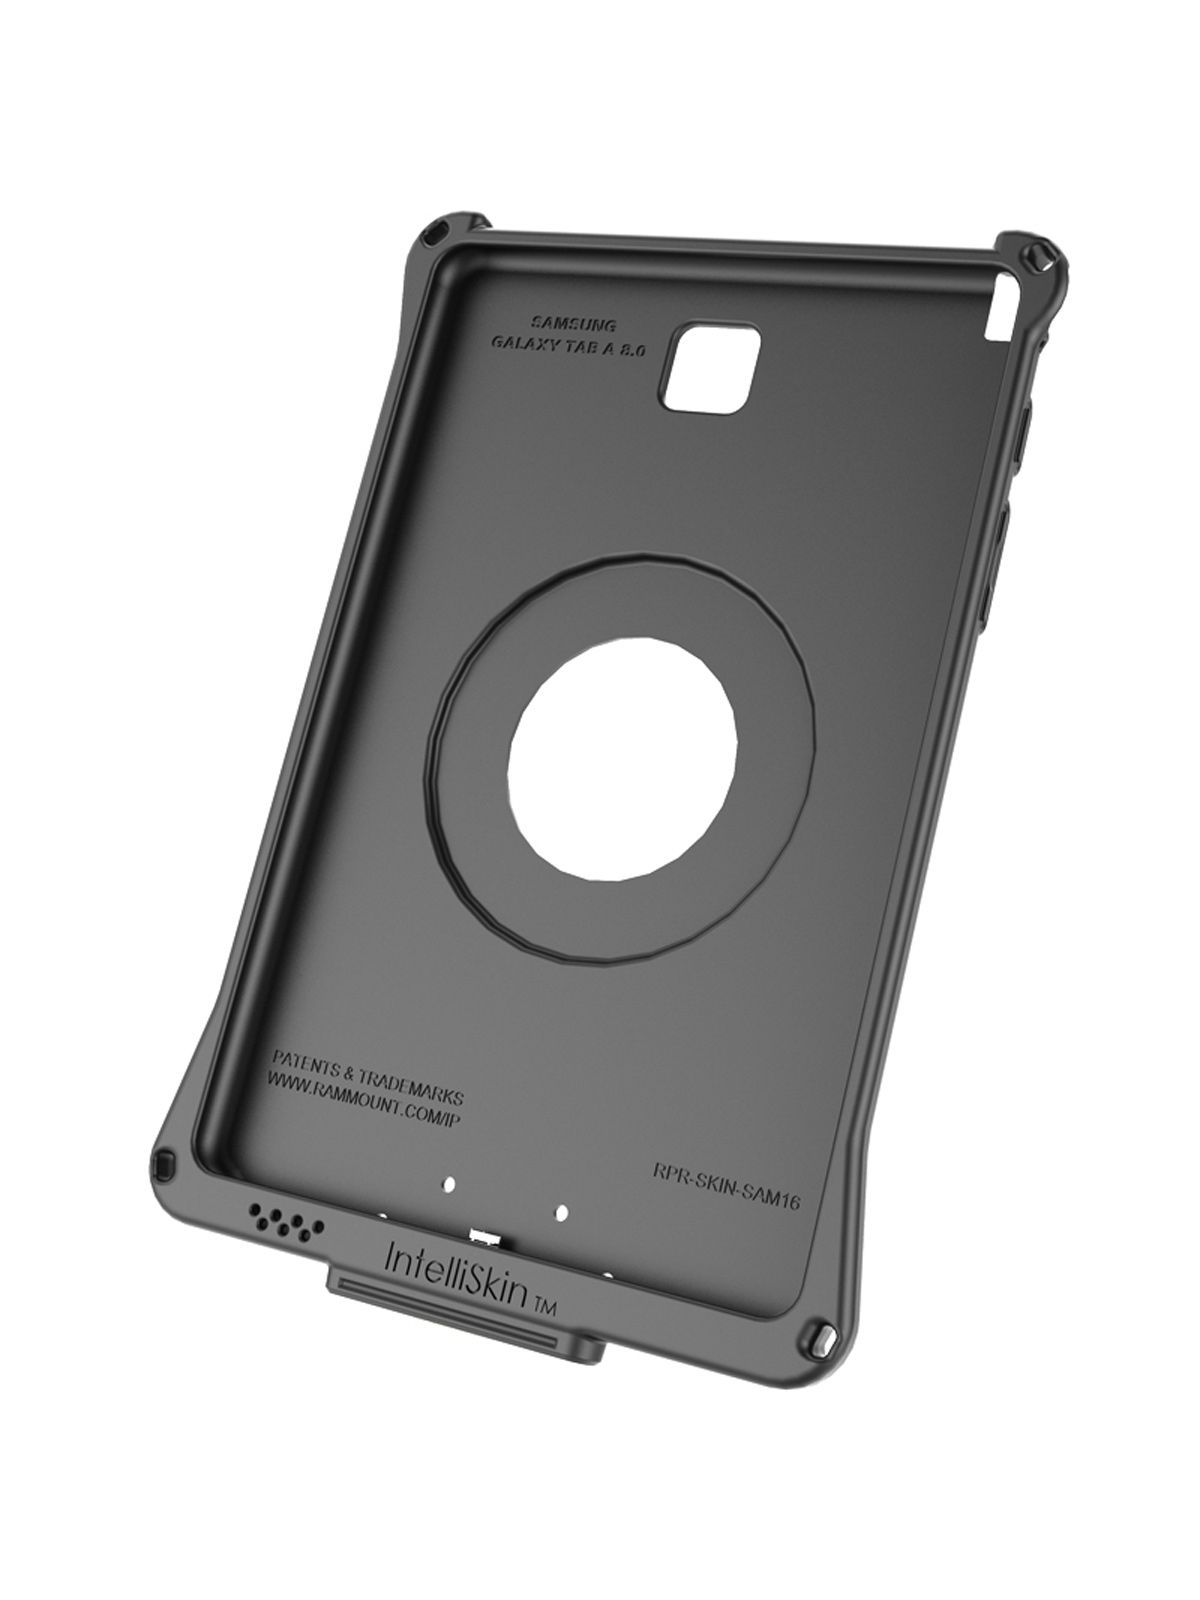 RAM Mounts IntelliSkin Lade-/Schutzhülle Samsung Galaxy Tab A 8.0 (2015) - GDS-Technologie